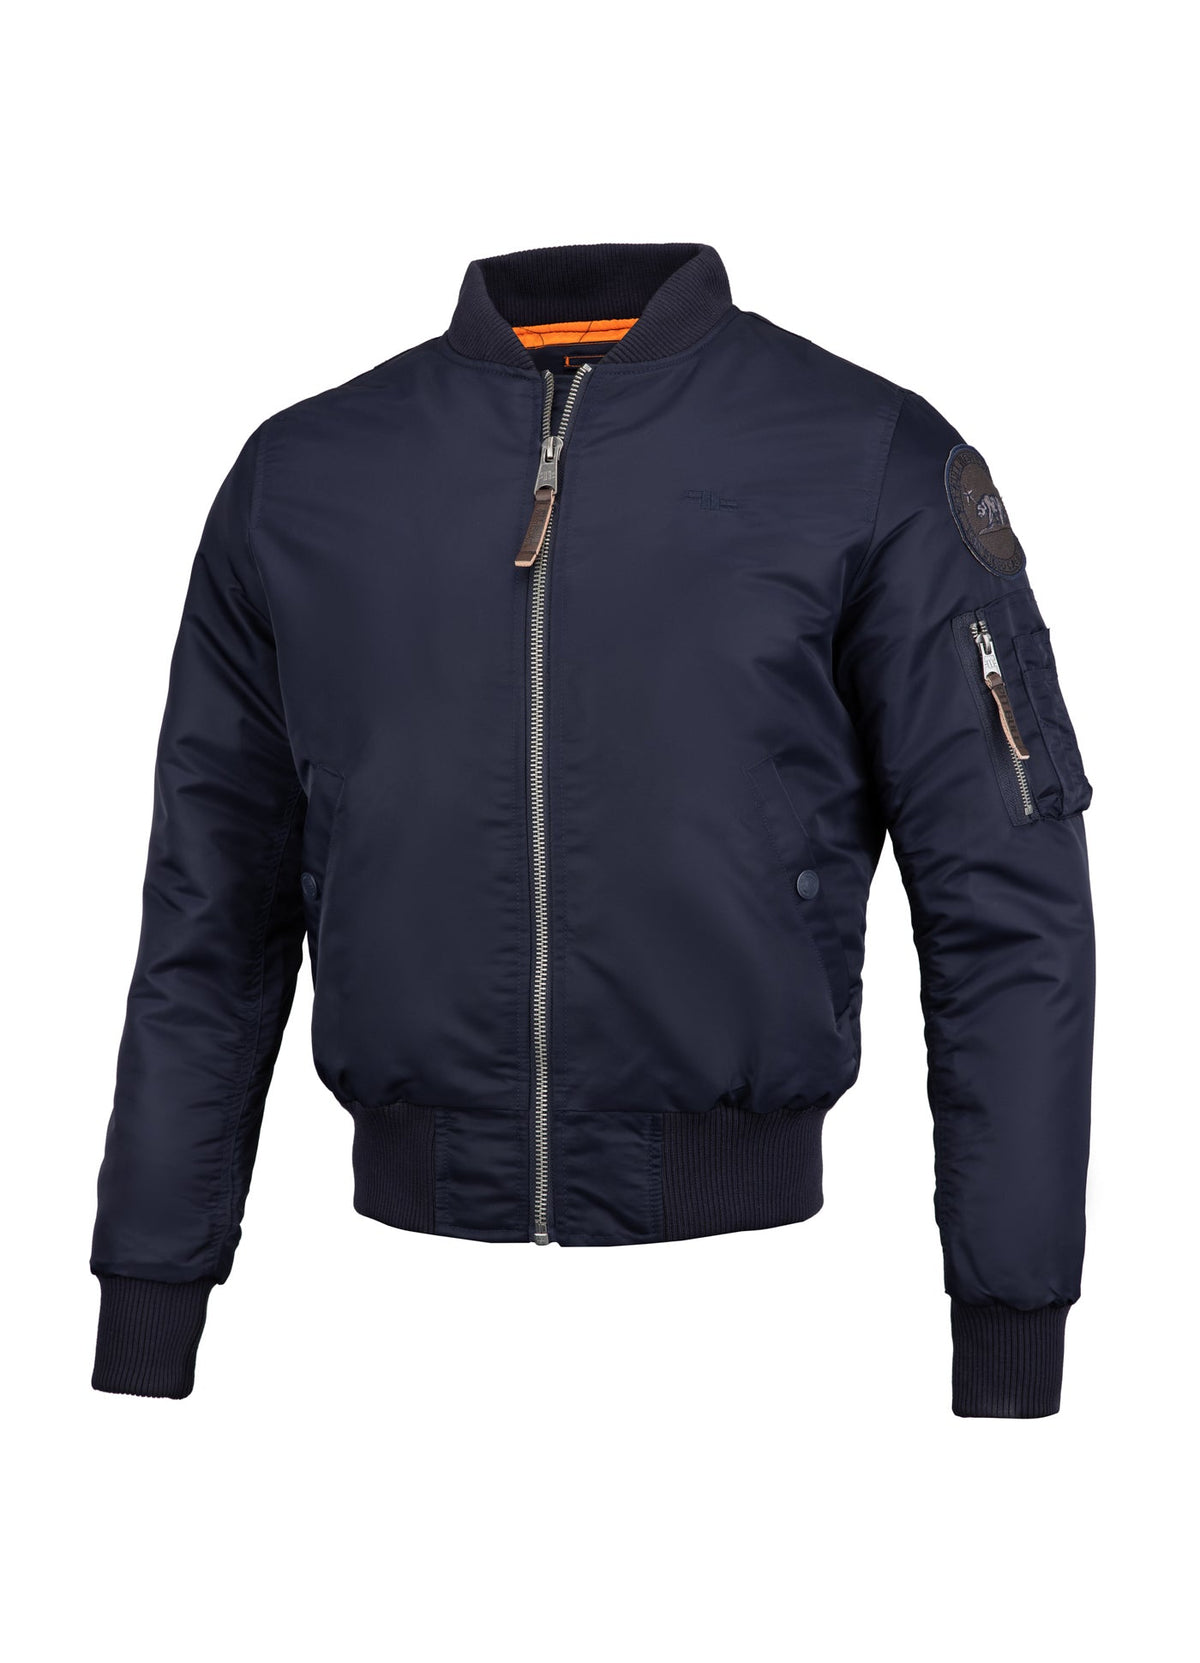 Padded Jacket MA 1 Dark Navy - Pitbull West Coast International Store 